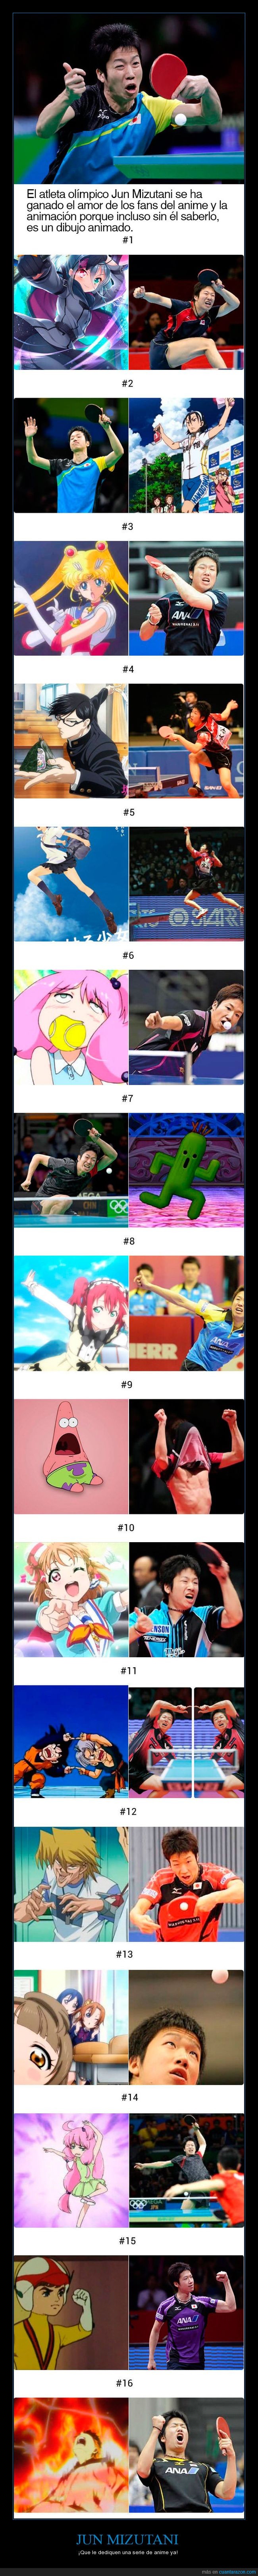 animacion,anime,cactilio,Jun mizutani,olimpiadas,olimpico,patricio,ping pong,salto